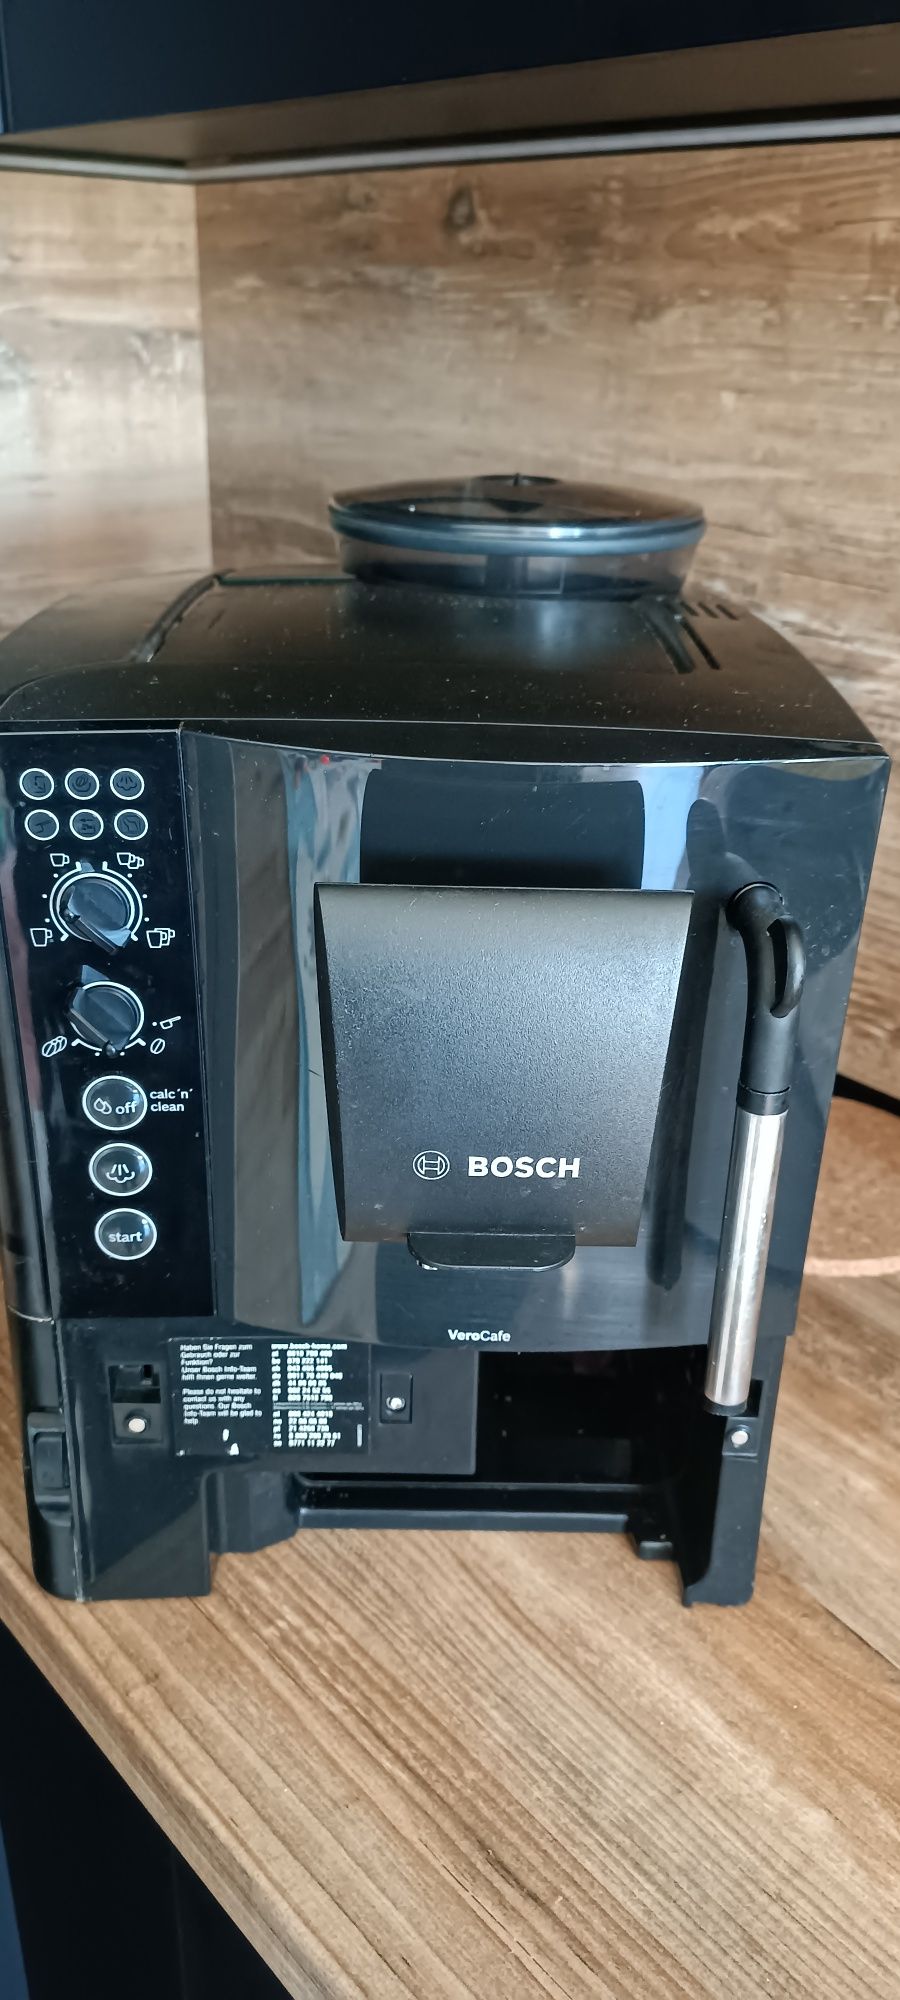 Ekspres Vero cafe Bosch